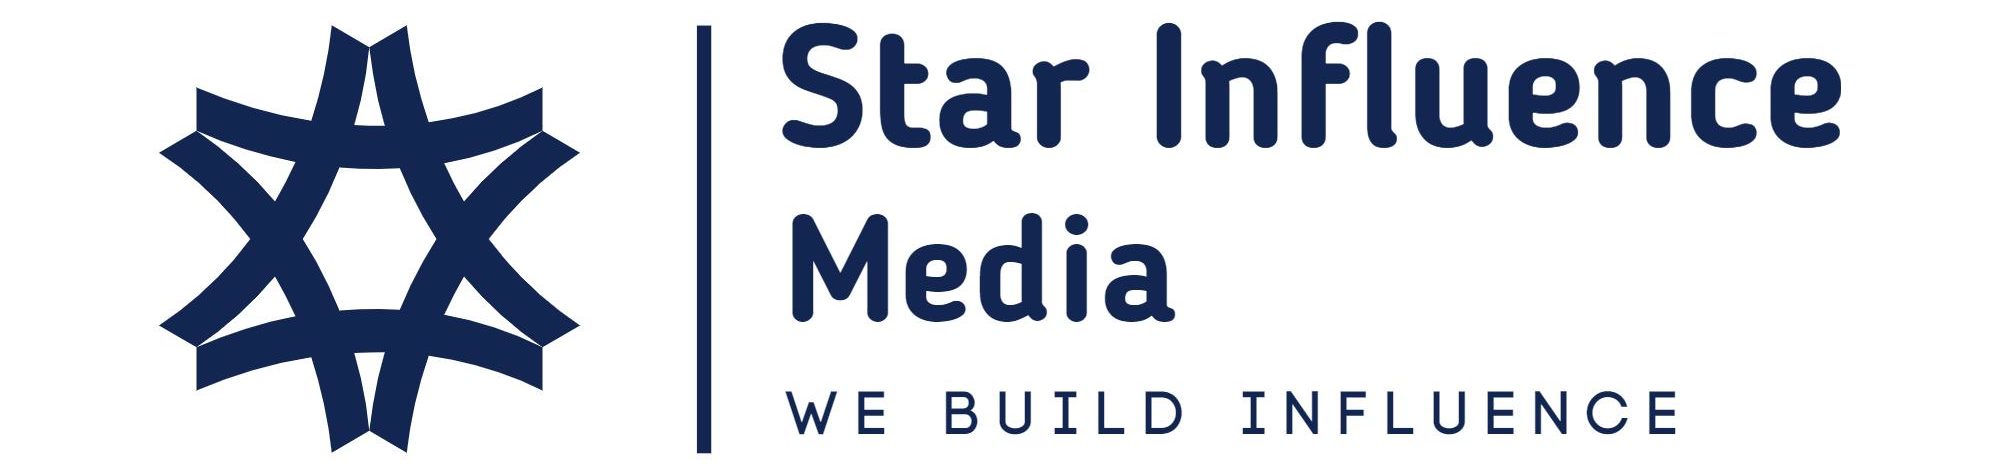 Star Influence Media